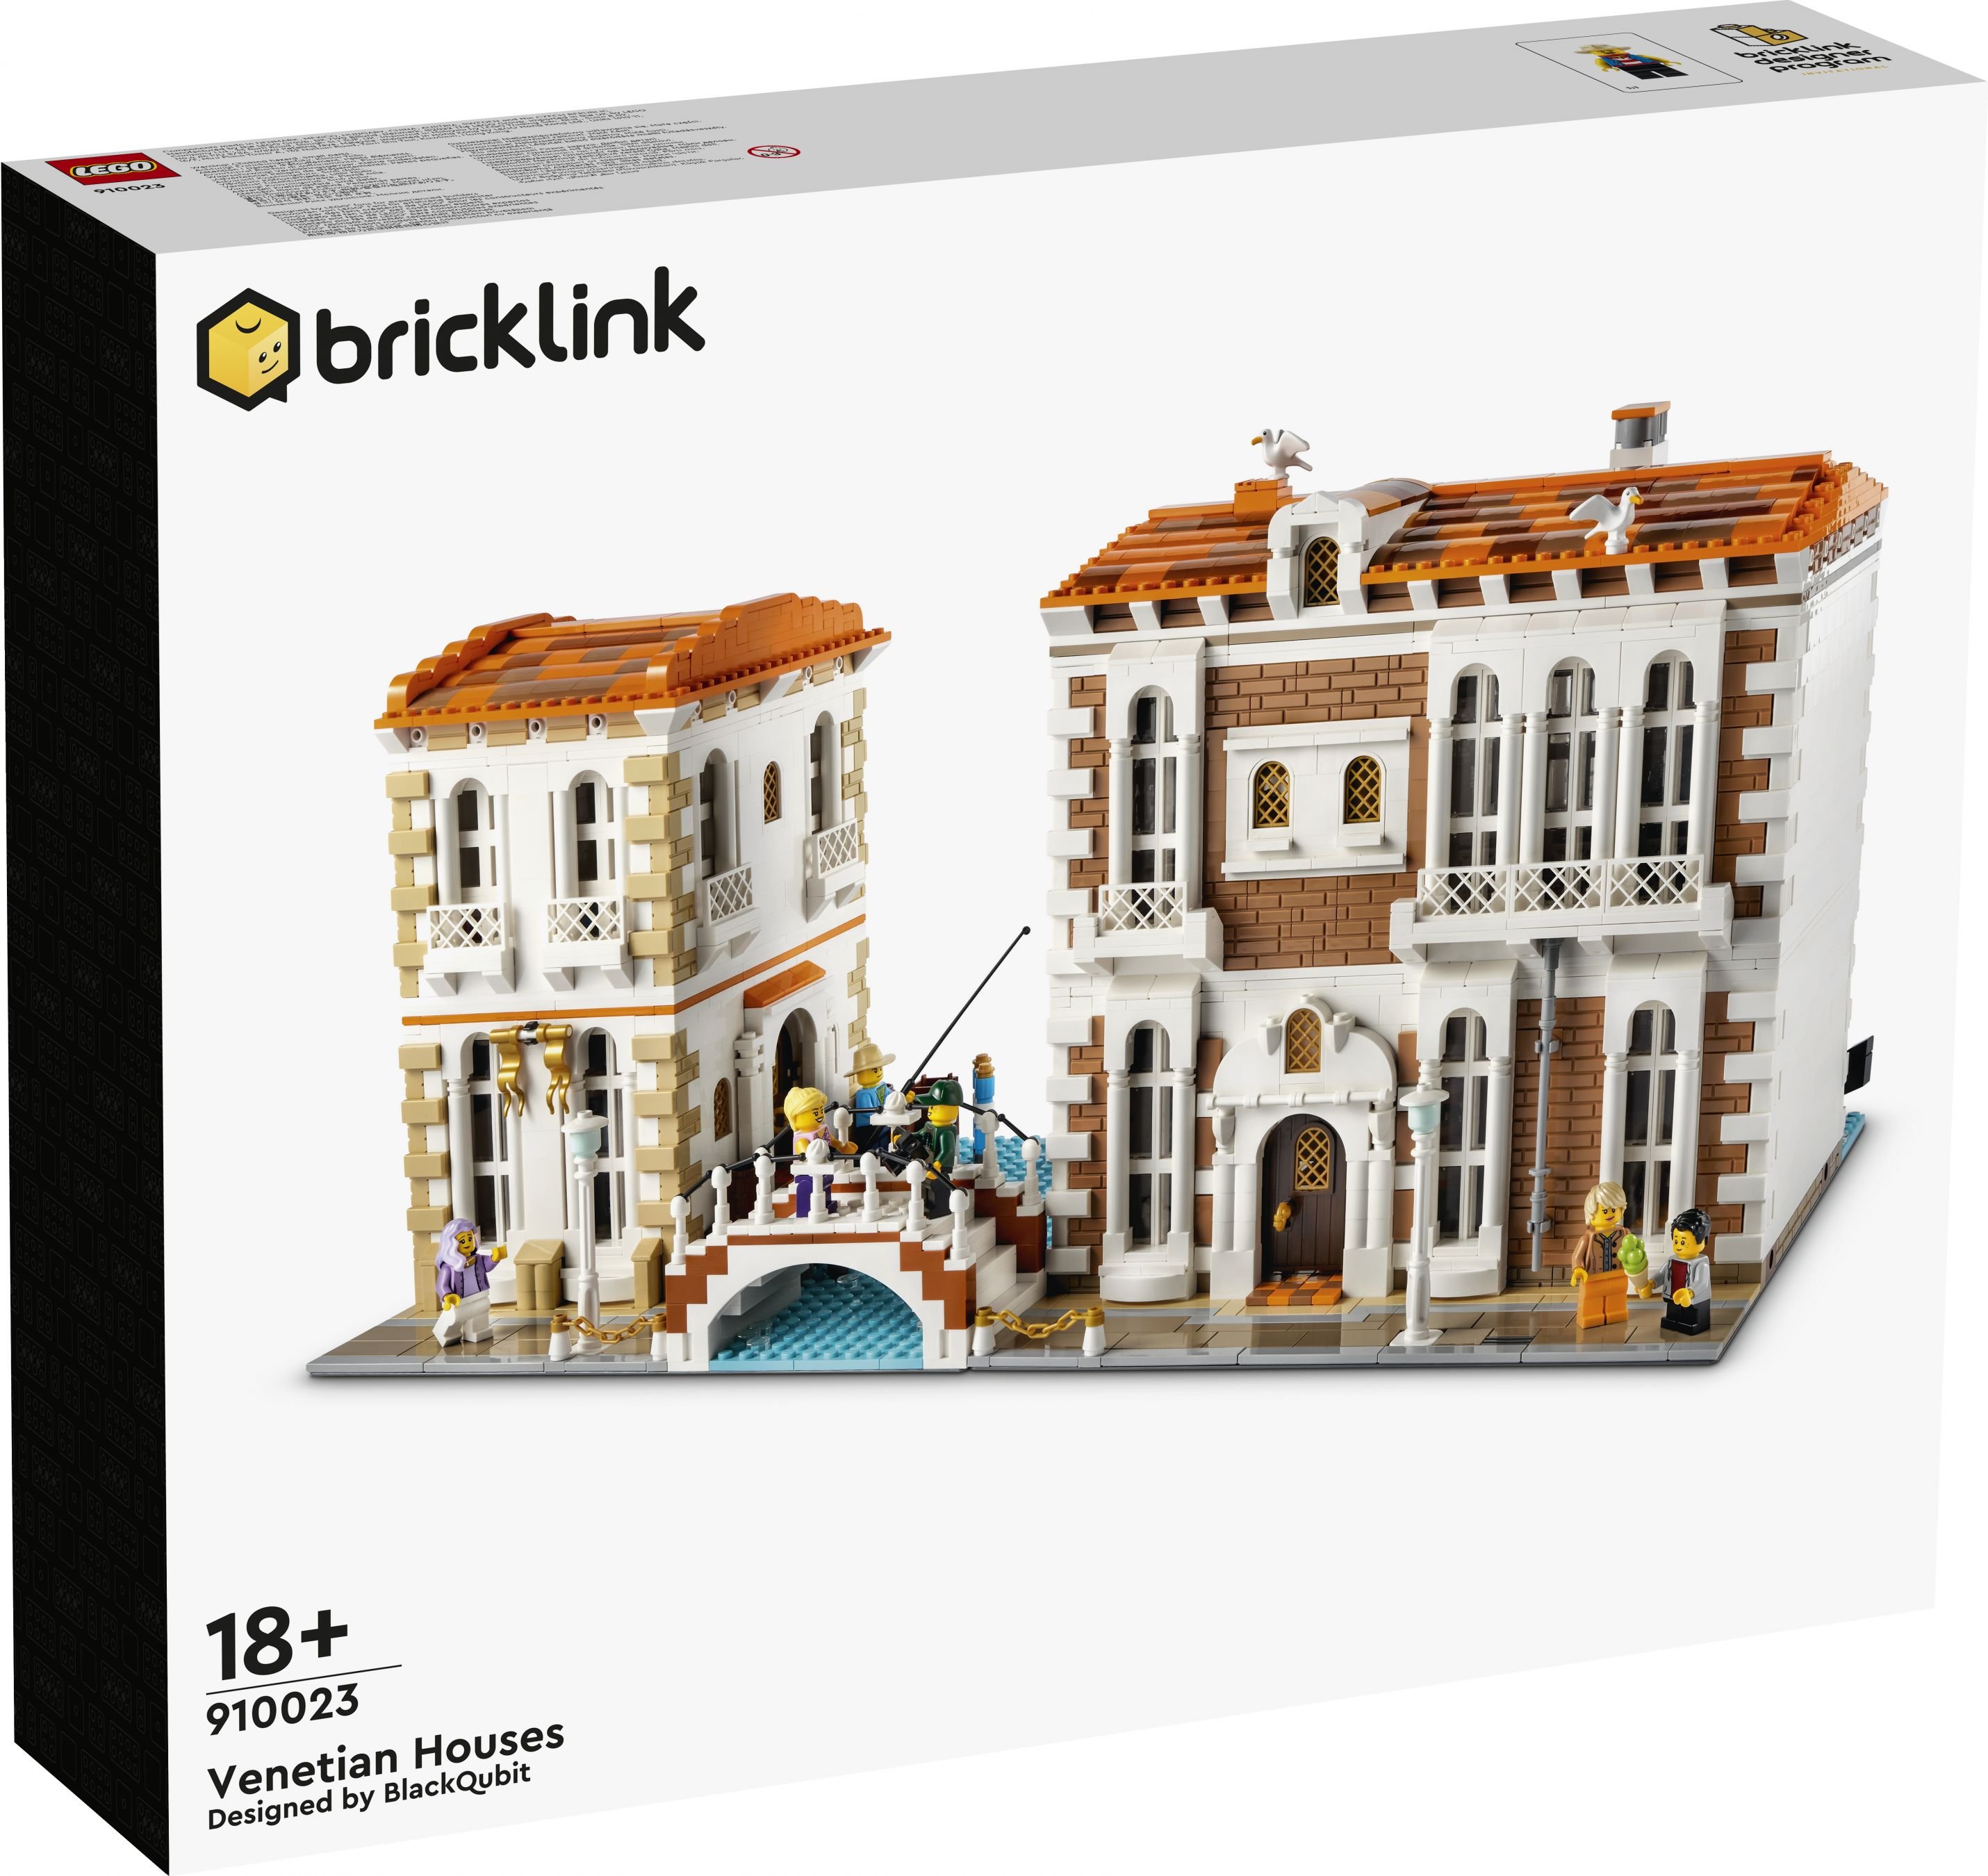 LEGO Bricklink 910023 Venetian Houses LEGO_910023_box1_v29.jpg